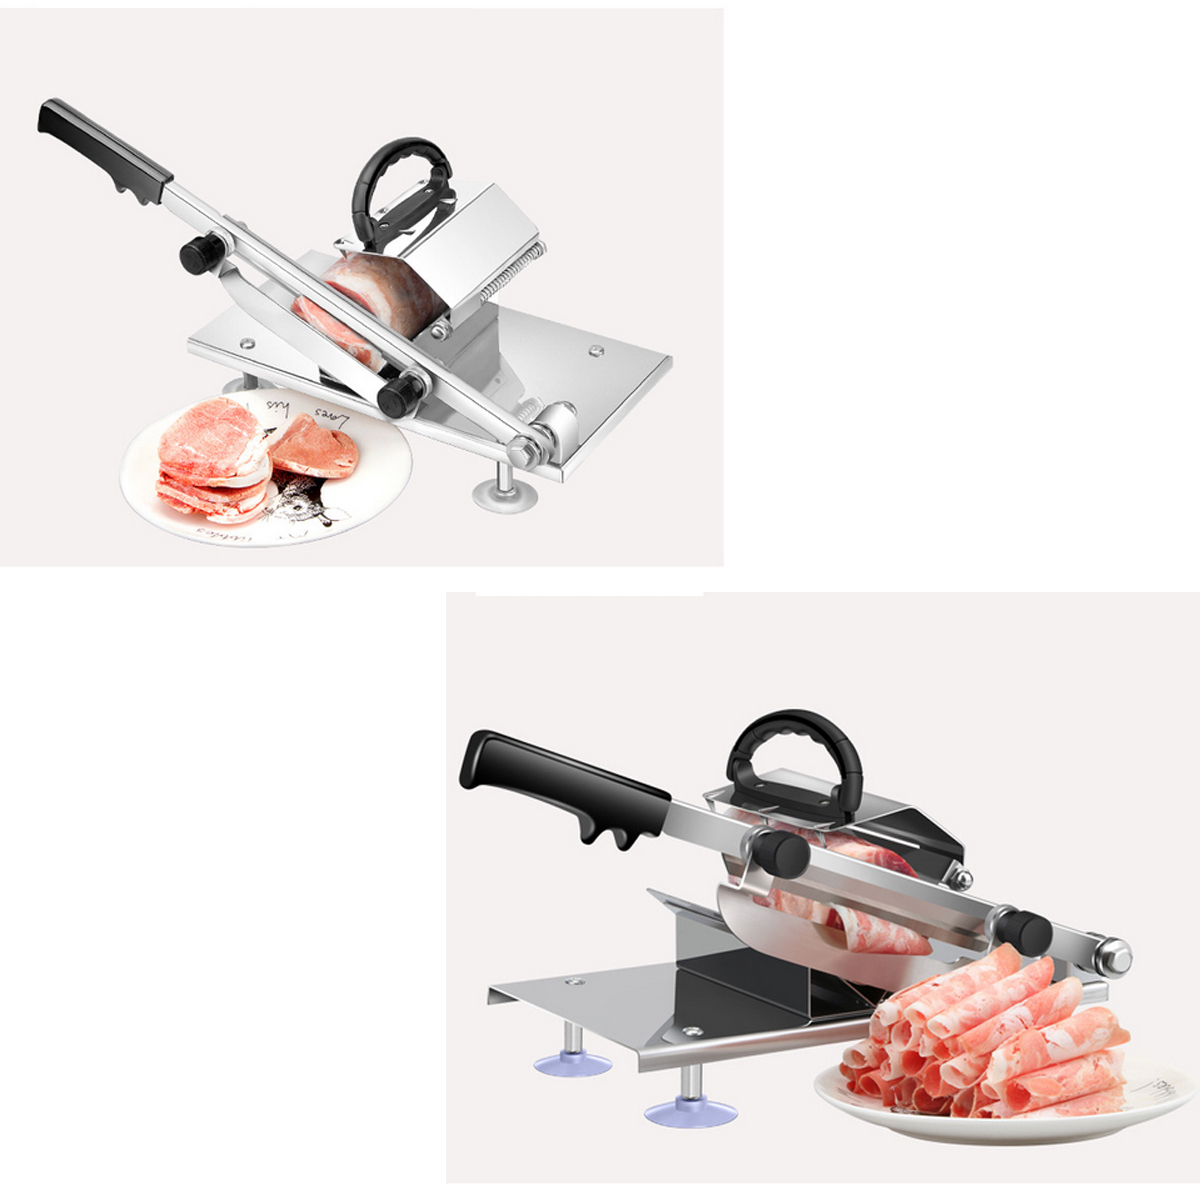 

Бытовая машина для резки мяса Замороженные Машина для нарезки листового мясорубки для мясорубки